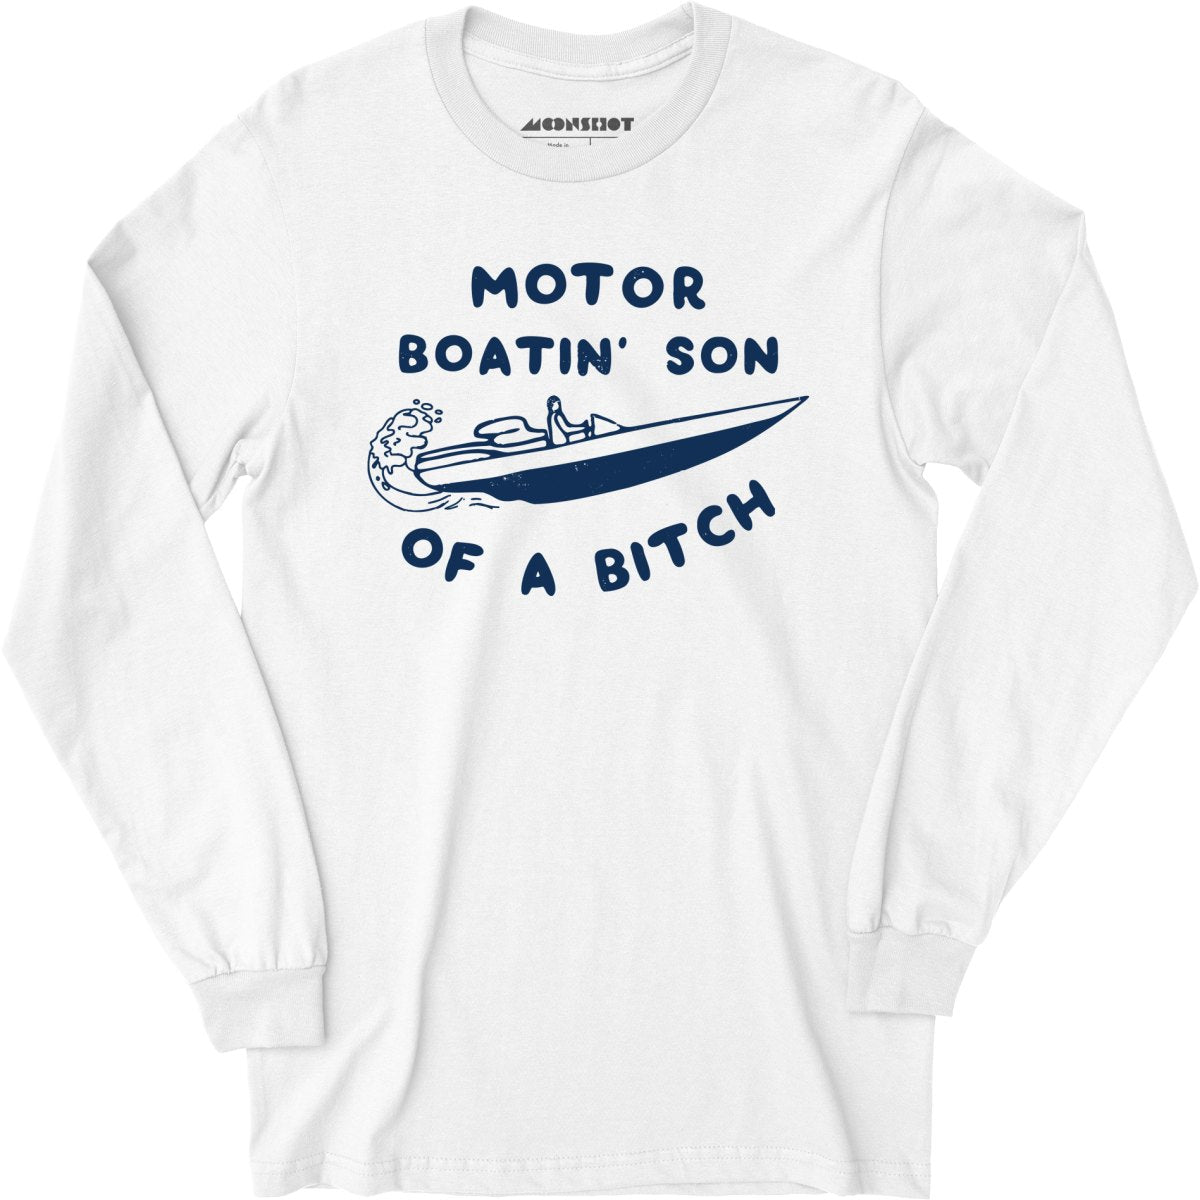 Motor Boatin' Son of a Bitch - Long Sleeve T-Shirt